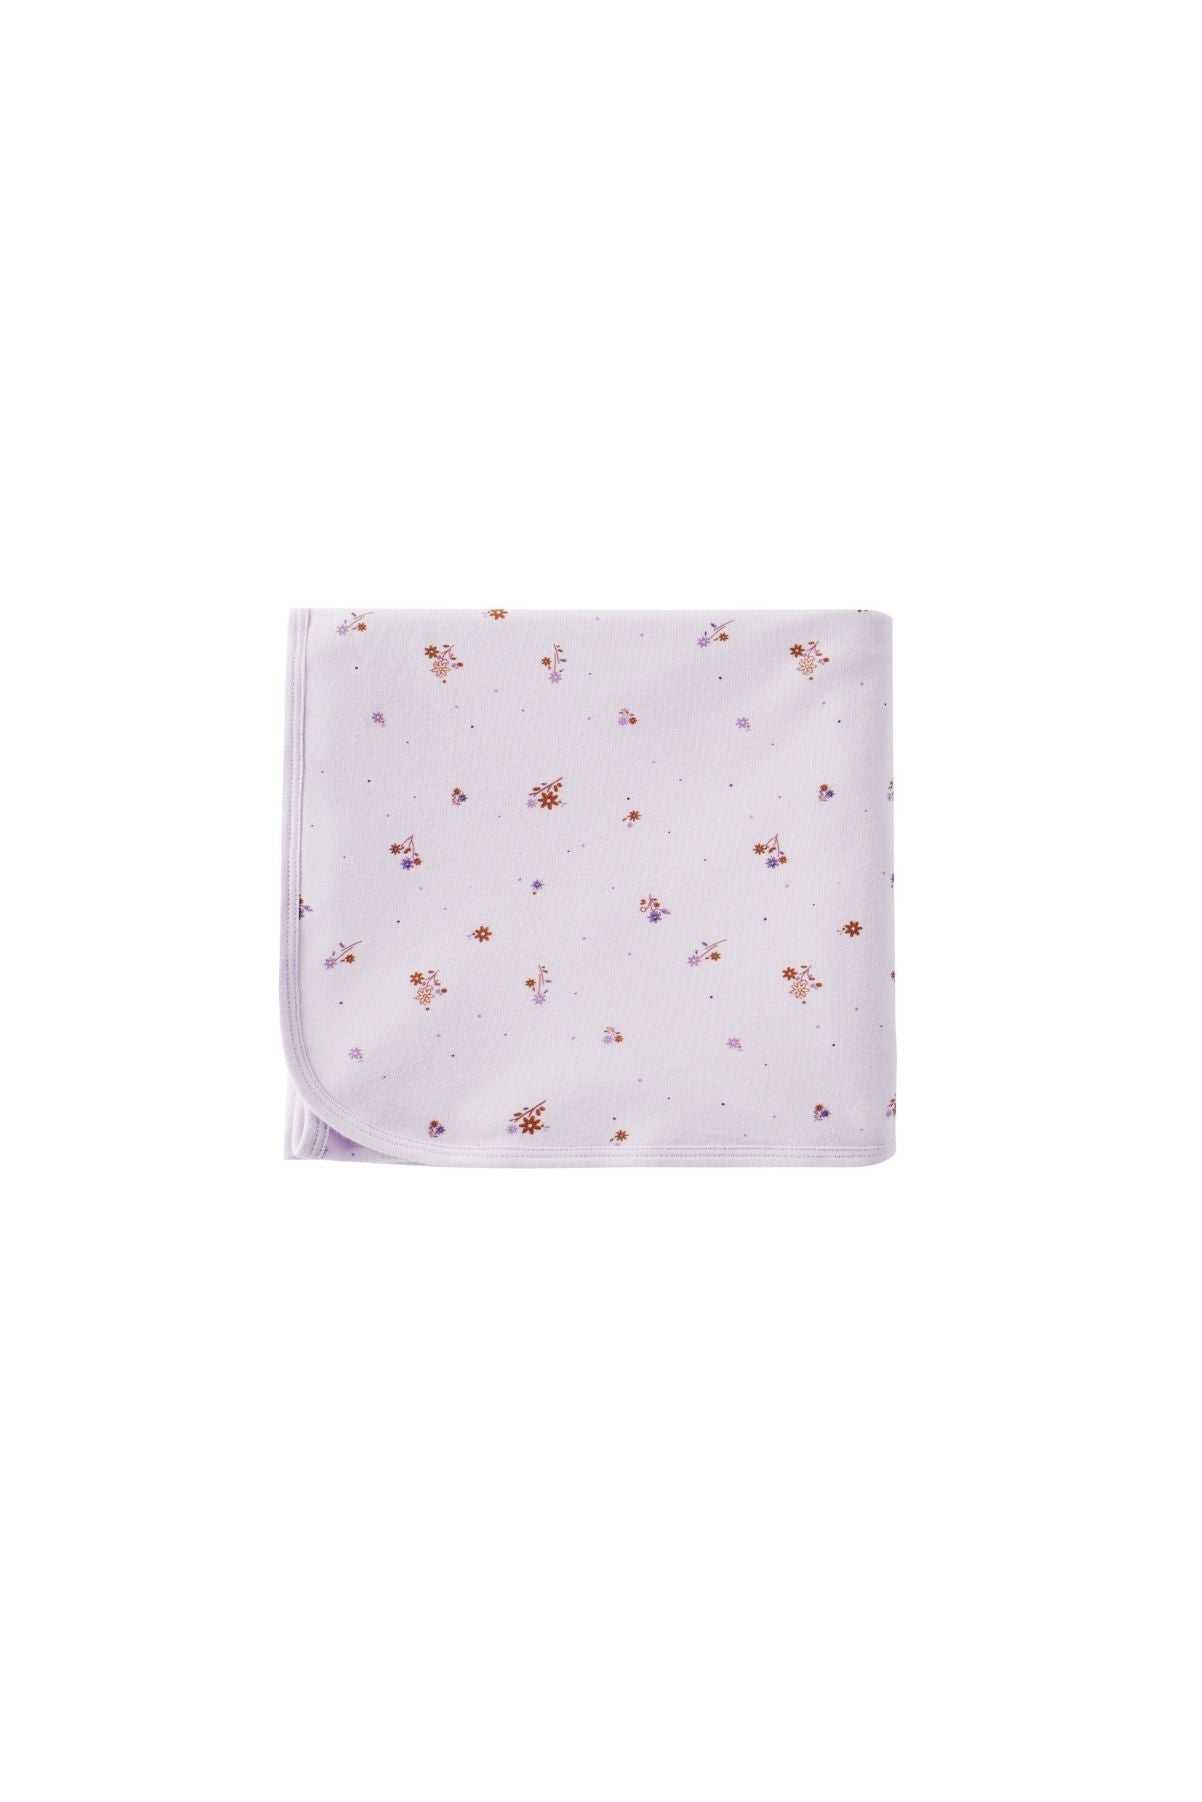 image for Organic Cotton Swaddle Blanket-Violet